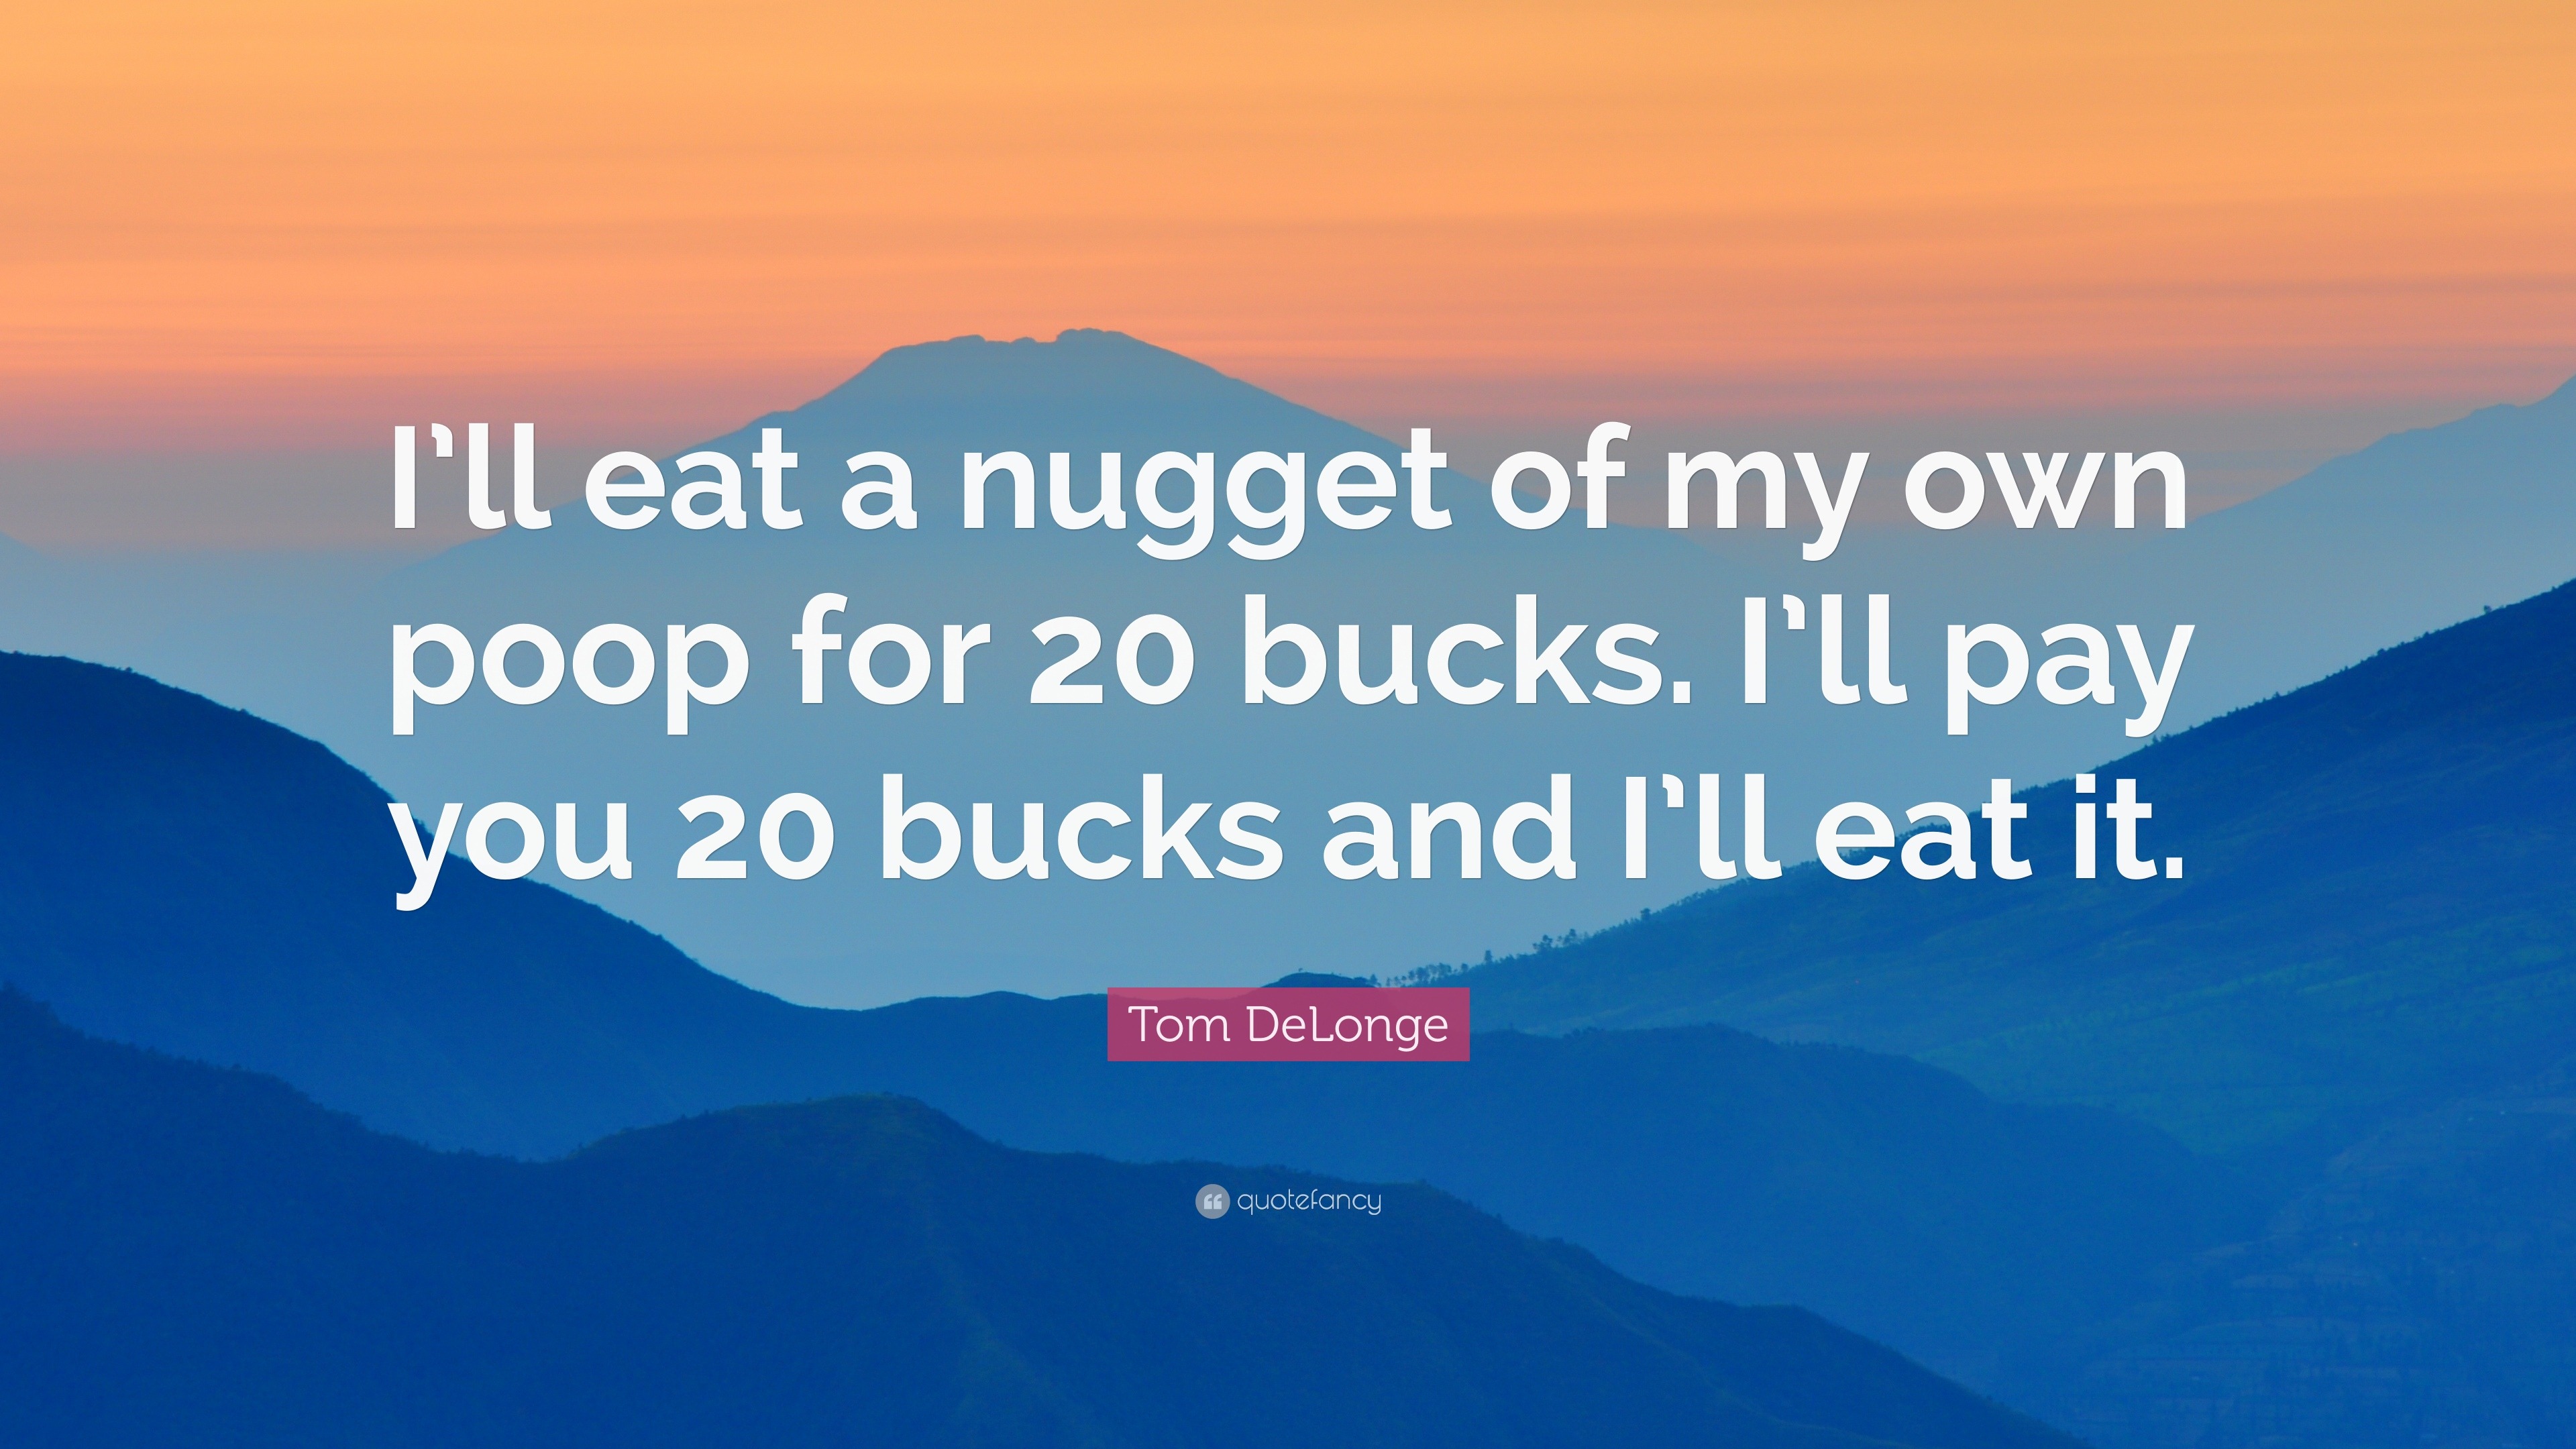 https://quotefancy.com/media/wallpaper/3840x2160/895940-Tom-DeLonge-Quote-I-ll-eat-a-nugget-of-my-own-poop-for-20-bucks-I.jpg